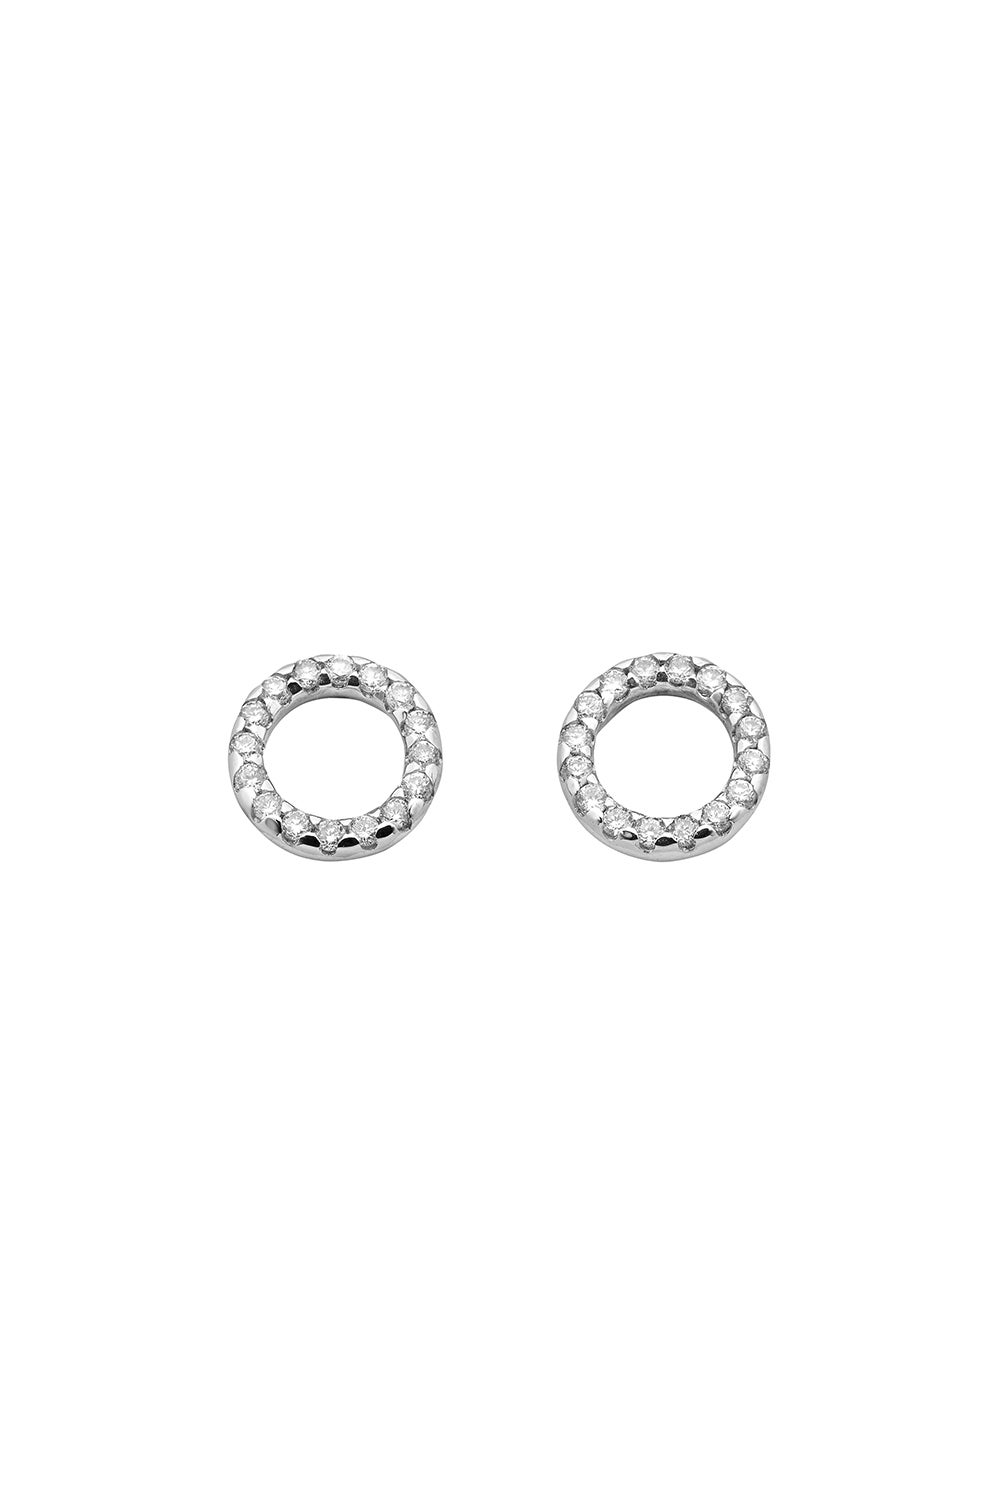 Orbit Diamond Earrings, 9ct White Gold, .21ct Diamond